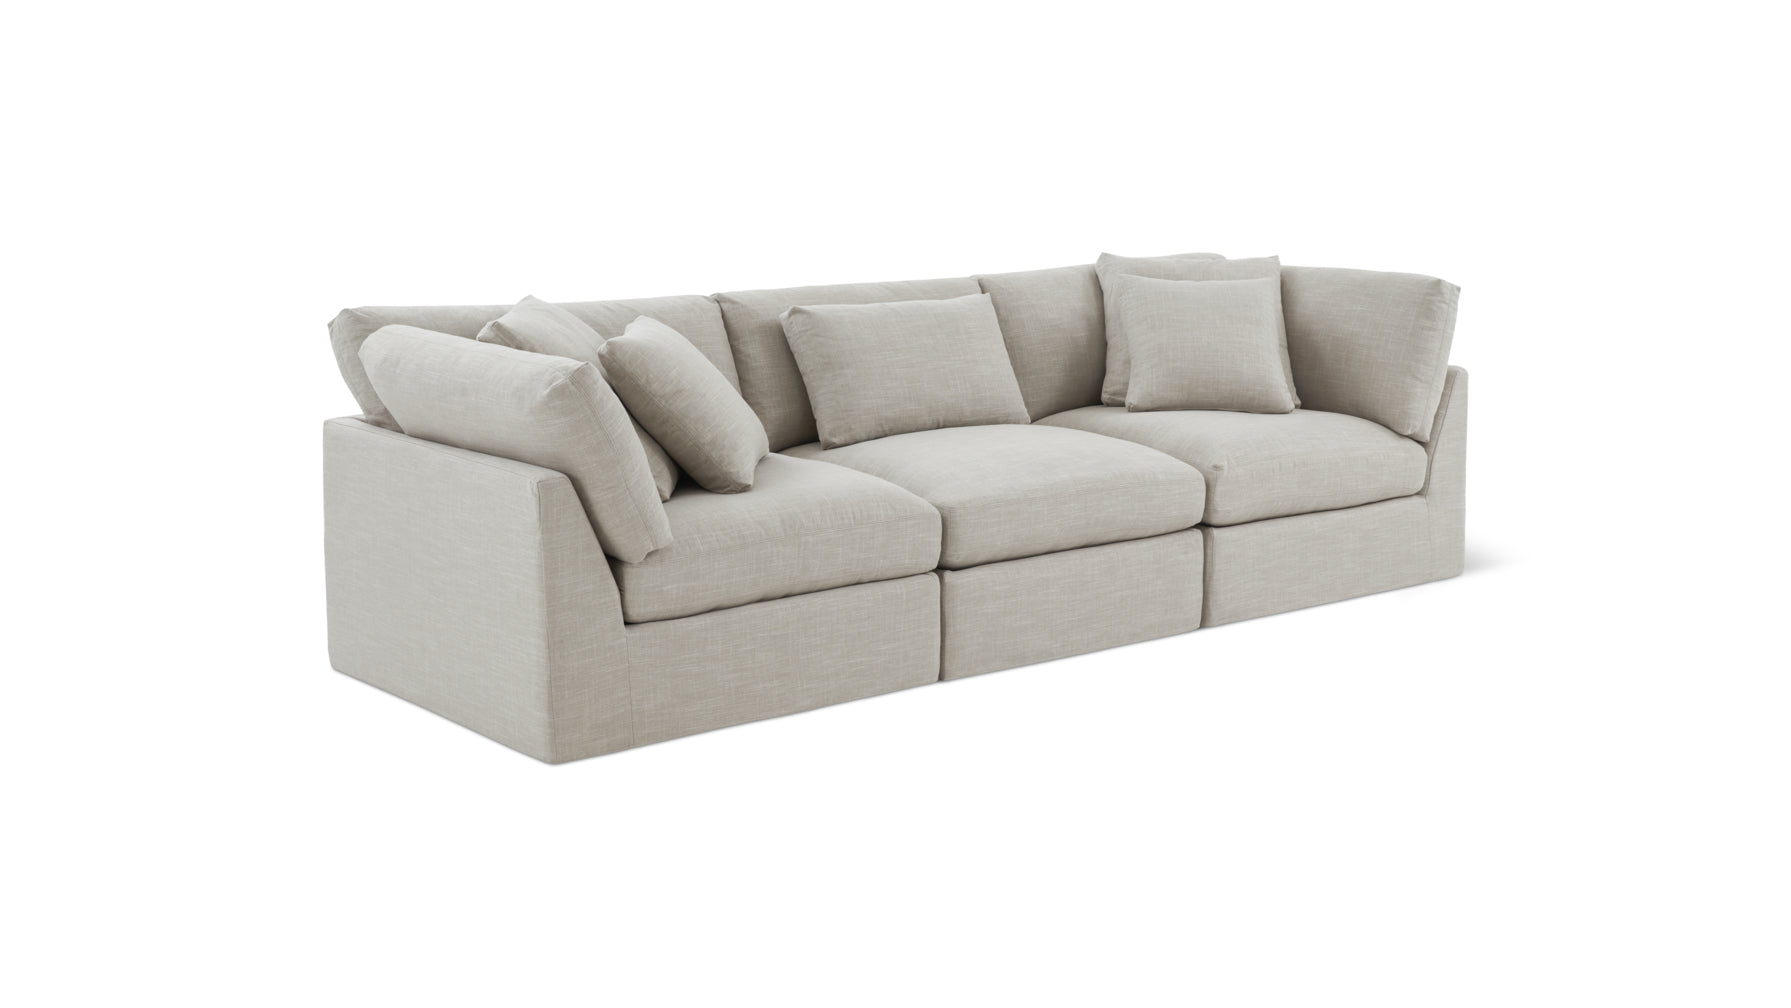 Get Together™ 3-Piece Modular Sofa, Large, Light Pebble - Image 2